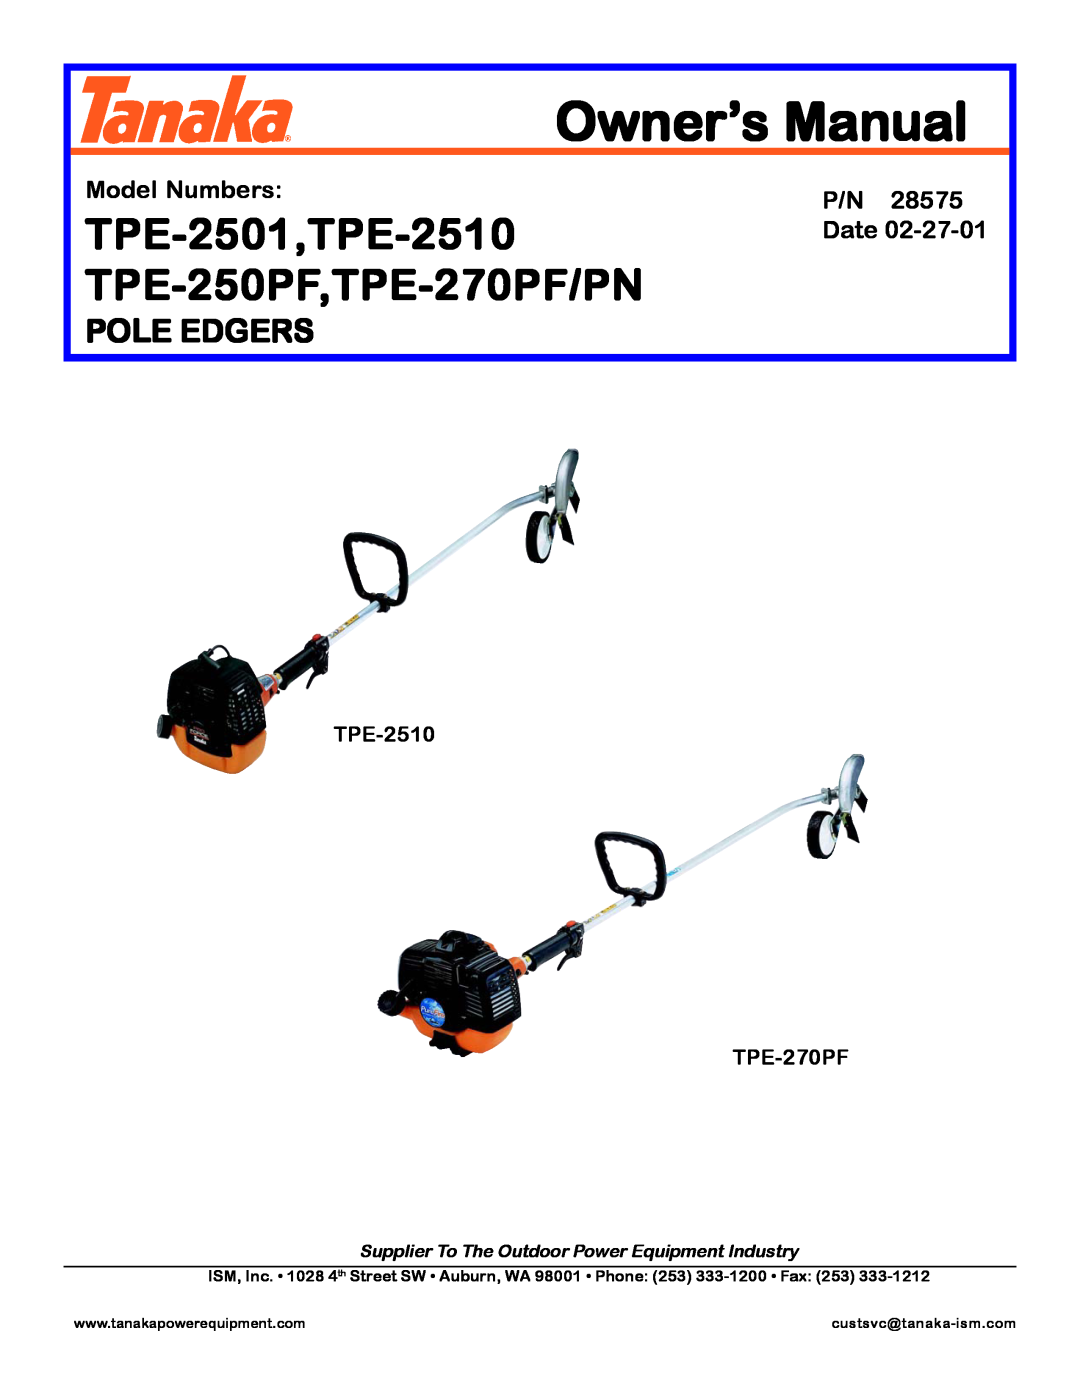 Tanaka TPE-2501 manual 24cc Portable Edger, Illustrated Parts Manual, Model Number, Date, custsvc@nikko-tanaka-usa.com 